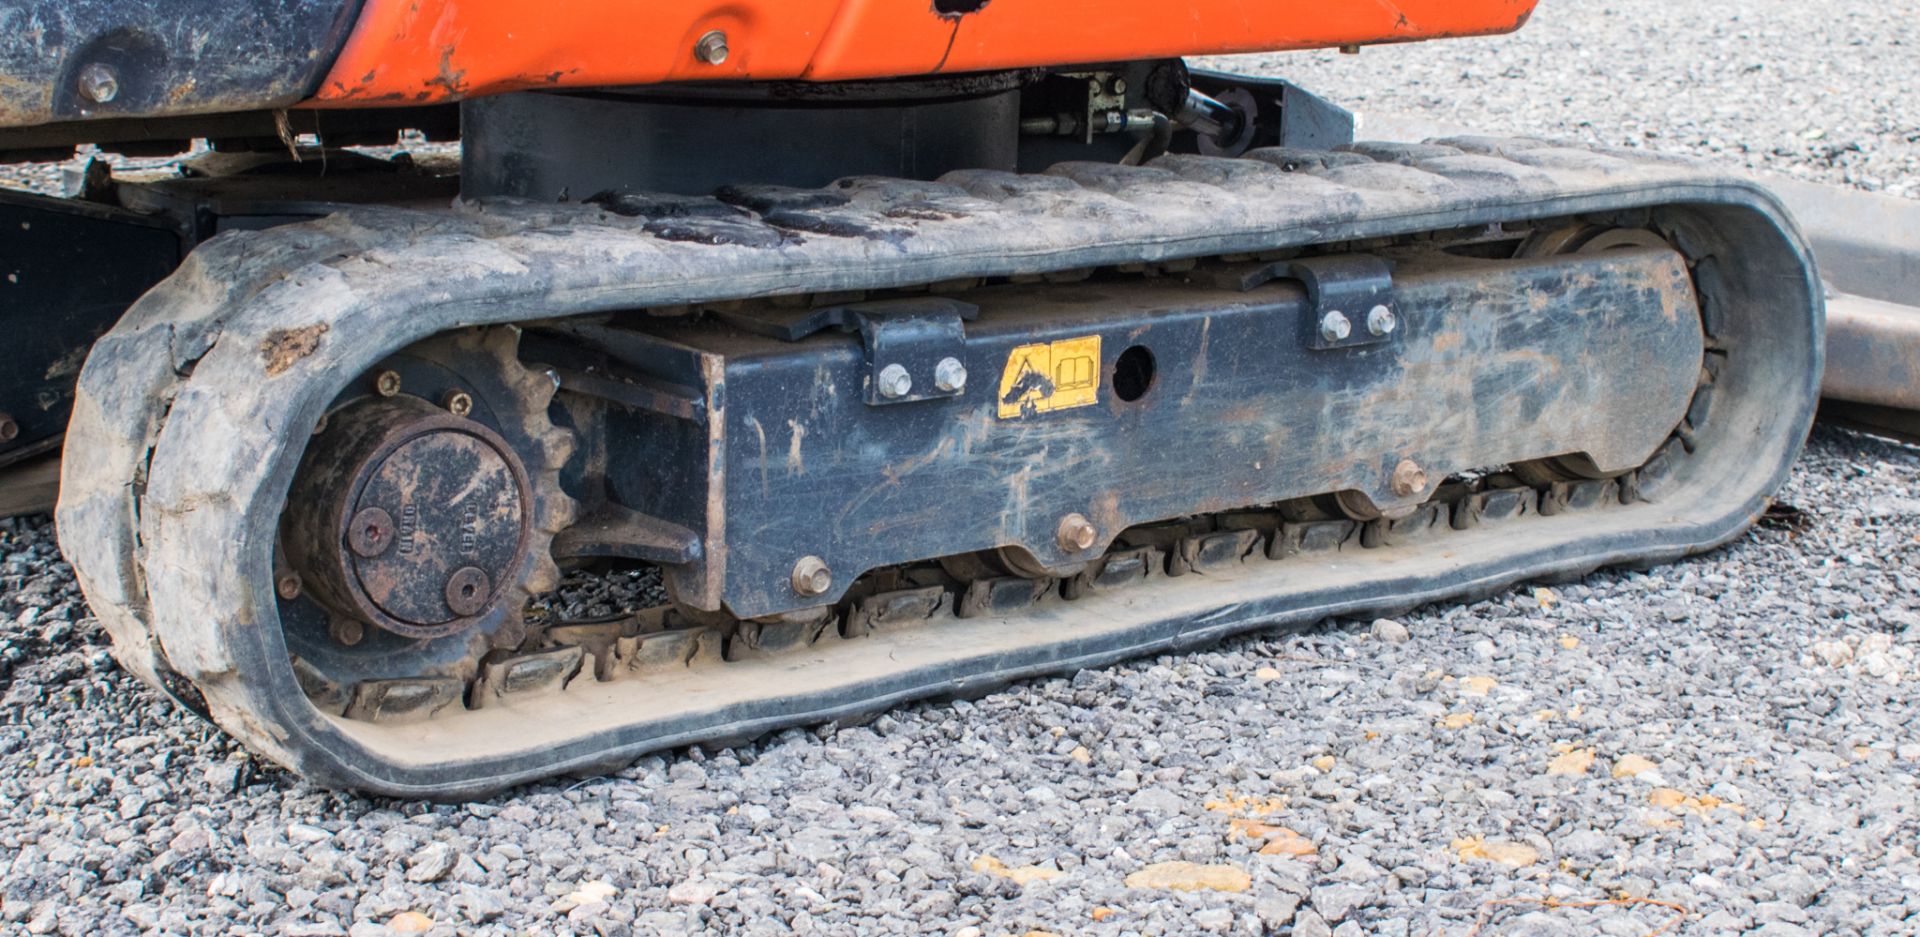 Kubota KX015.4 1.5 tonne rubber tracked mini excavator  Year: 2014 S/N: 57909 Recorded Hours: 1241 - Image 9 of 18